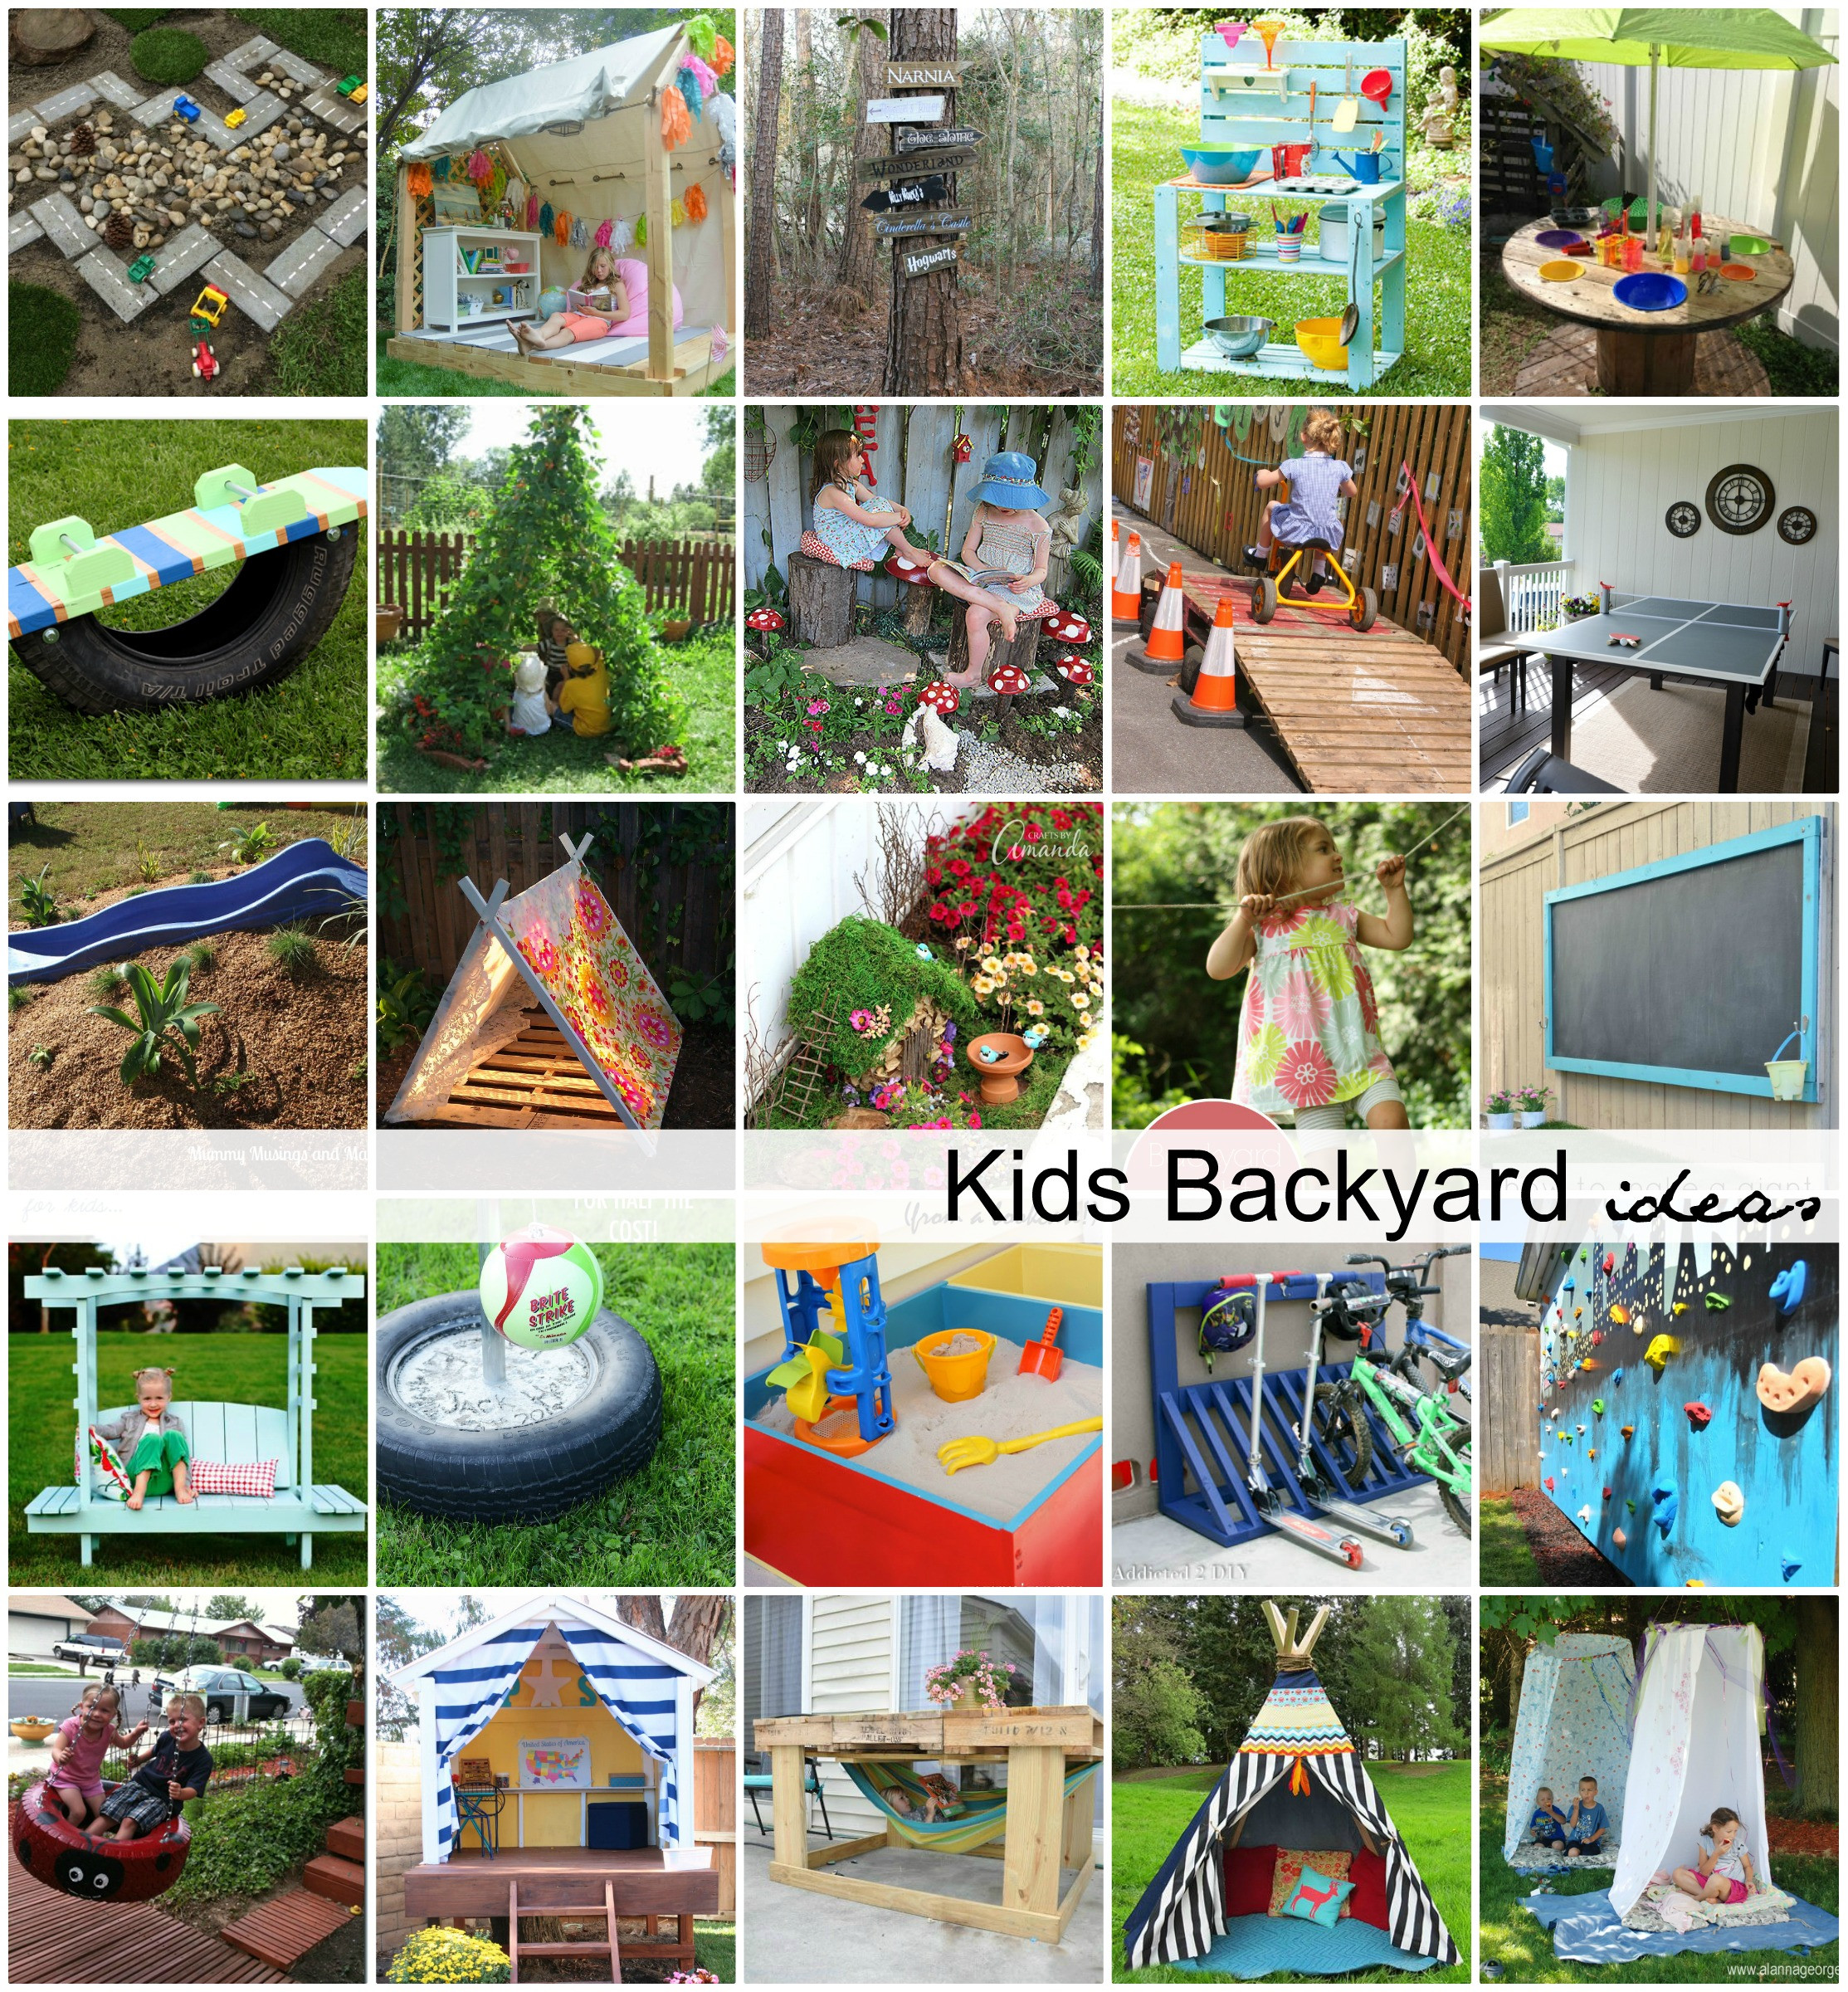 DIY Backyard Ideas For Kids
 DIY Backyard Ideas for Kids The Idea Room